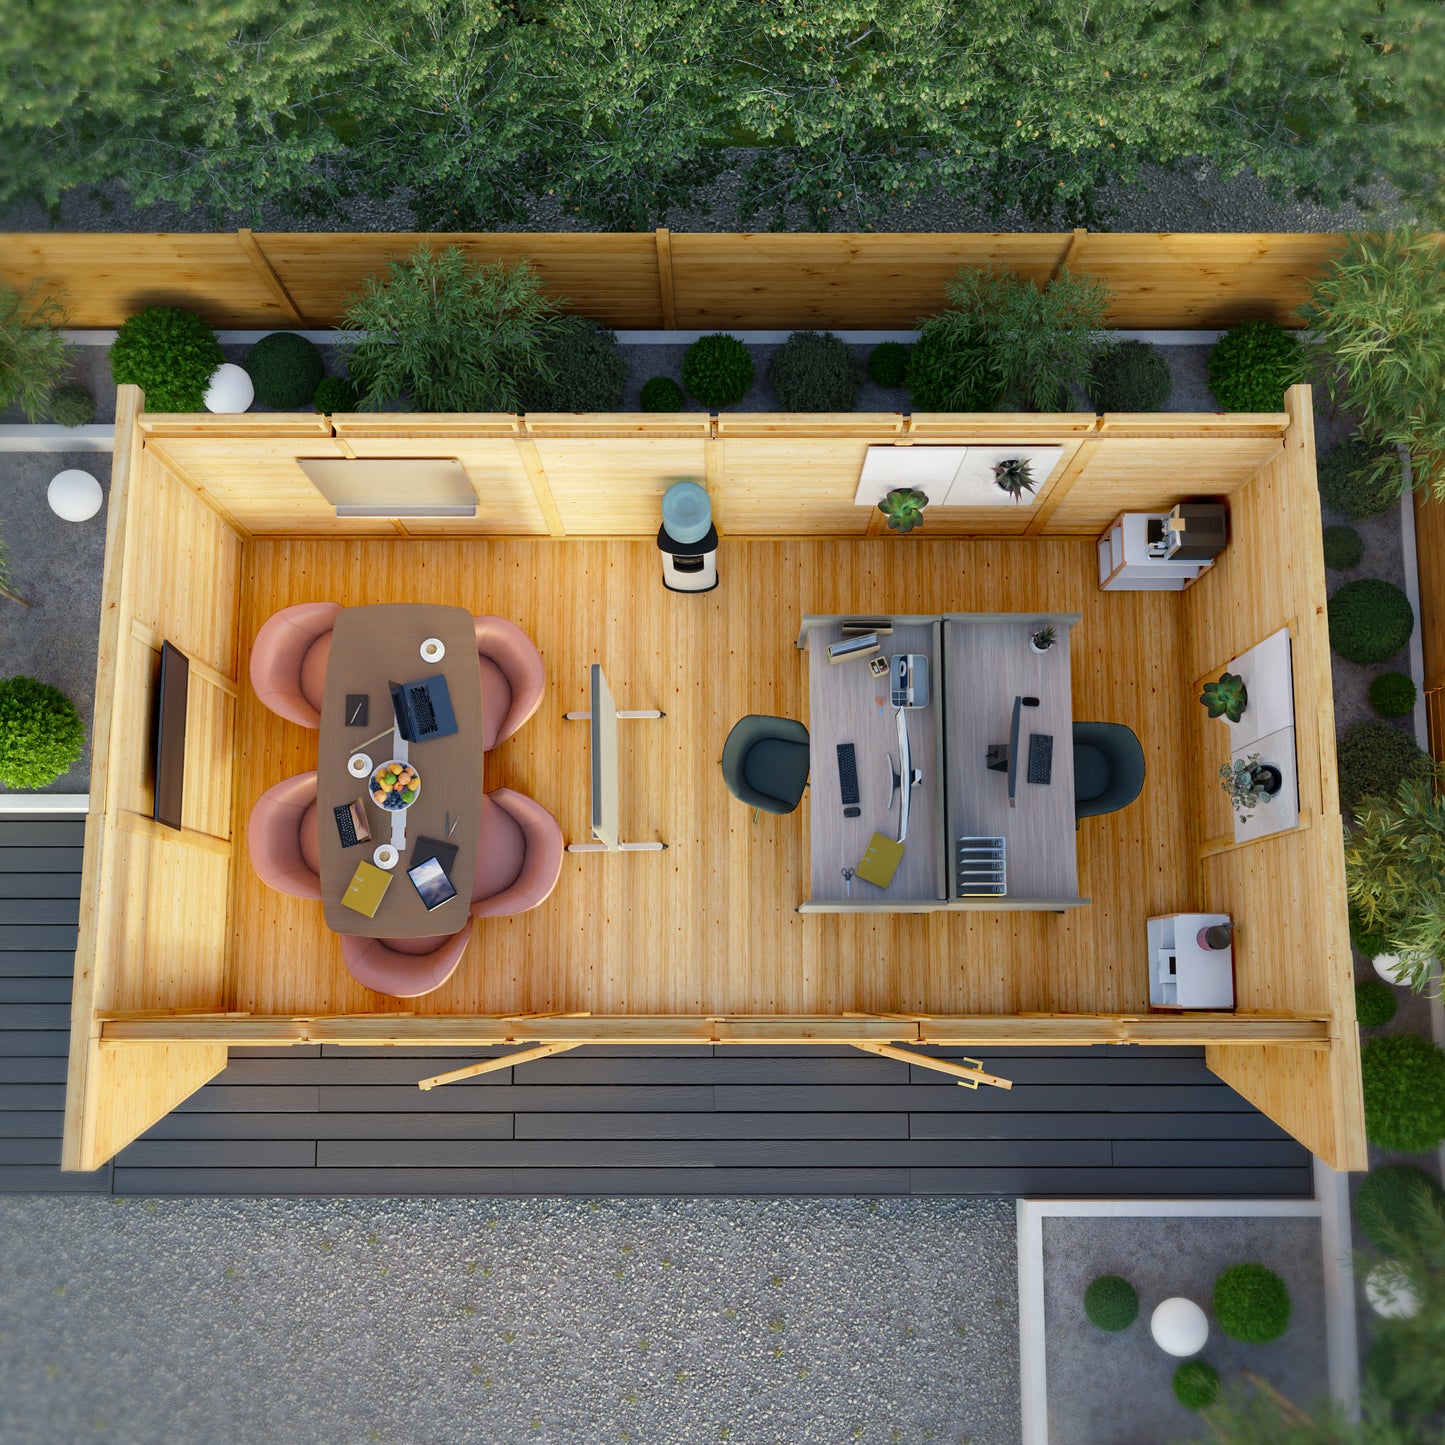 The Harlow 6m x 3m Premium Insulated Garden Room